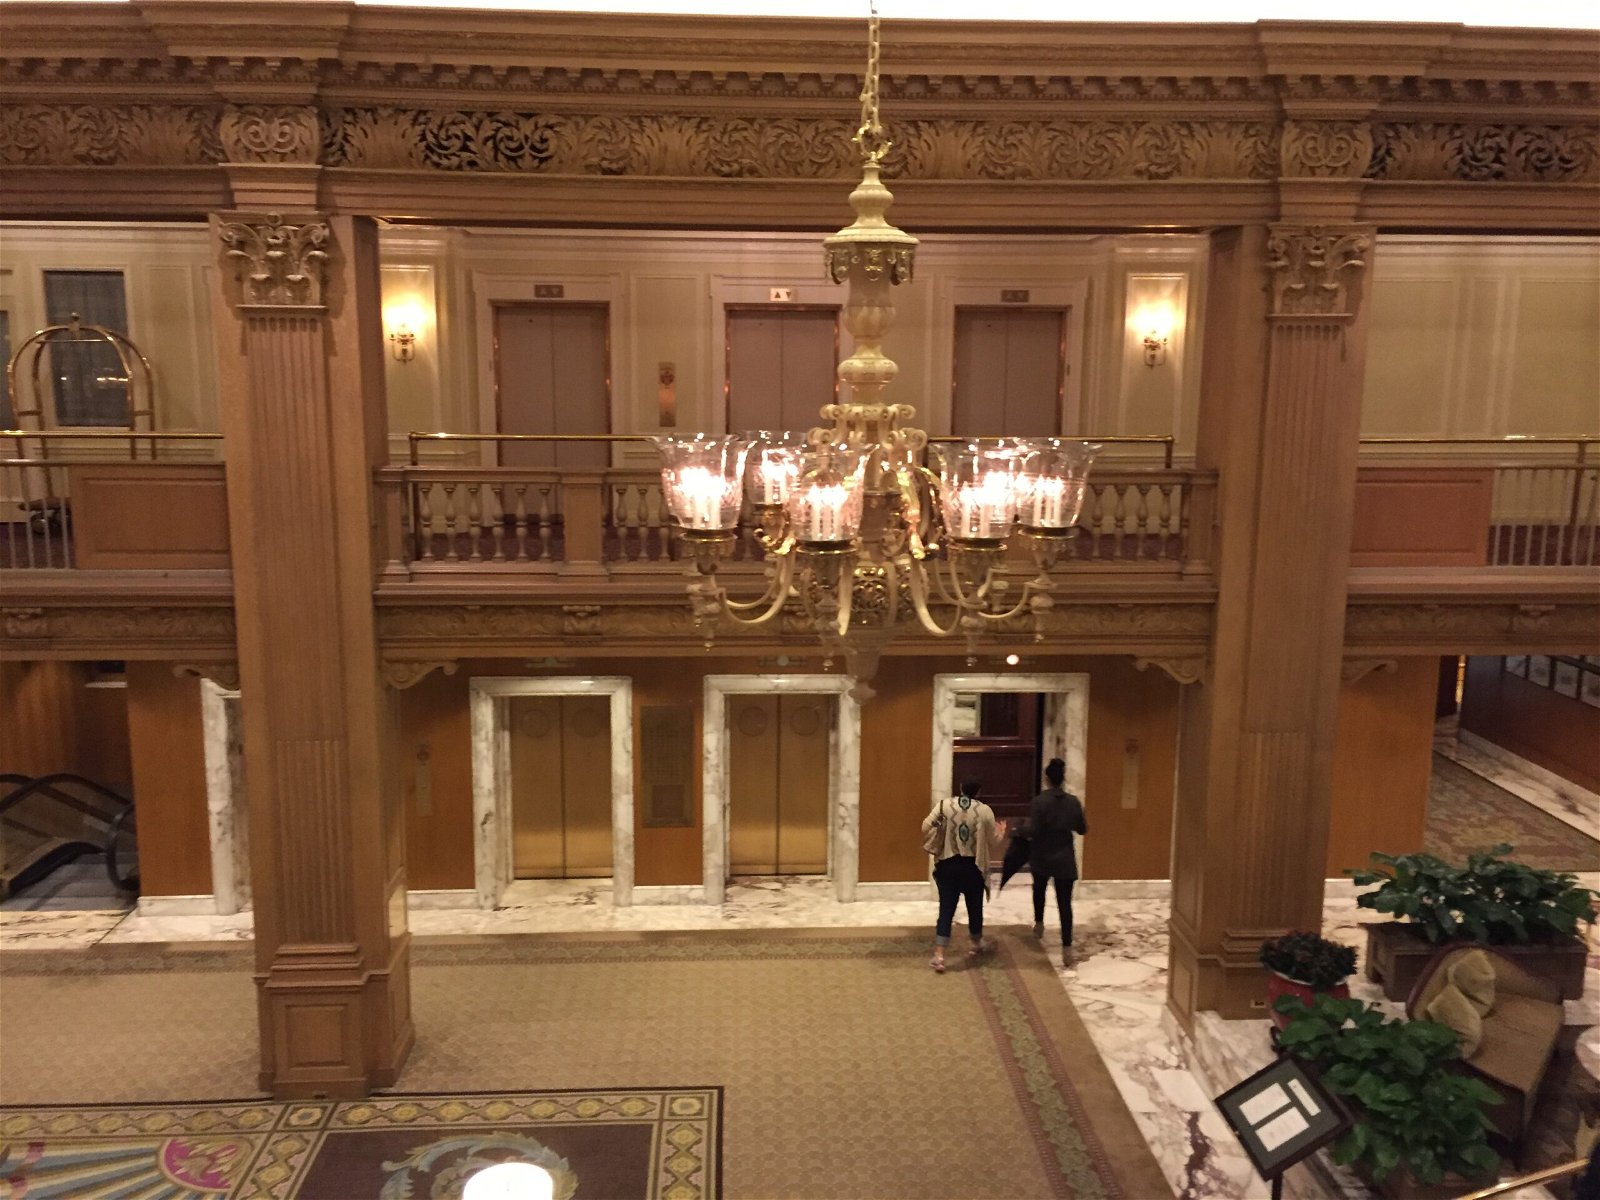 Overhead view of lobby from Mezzanine